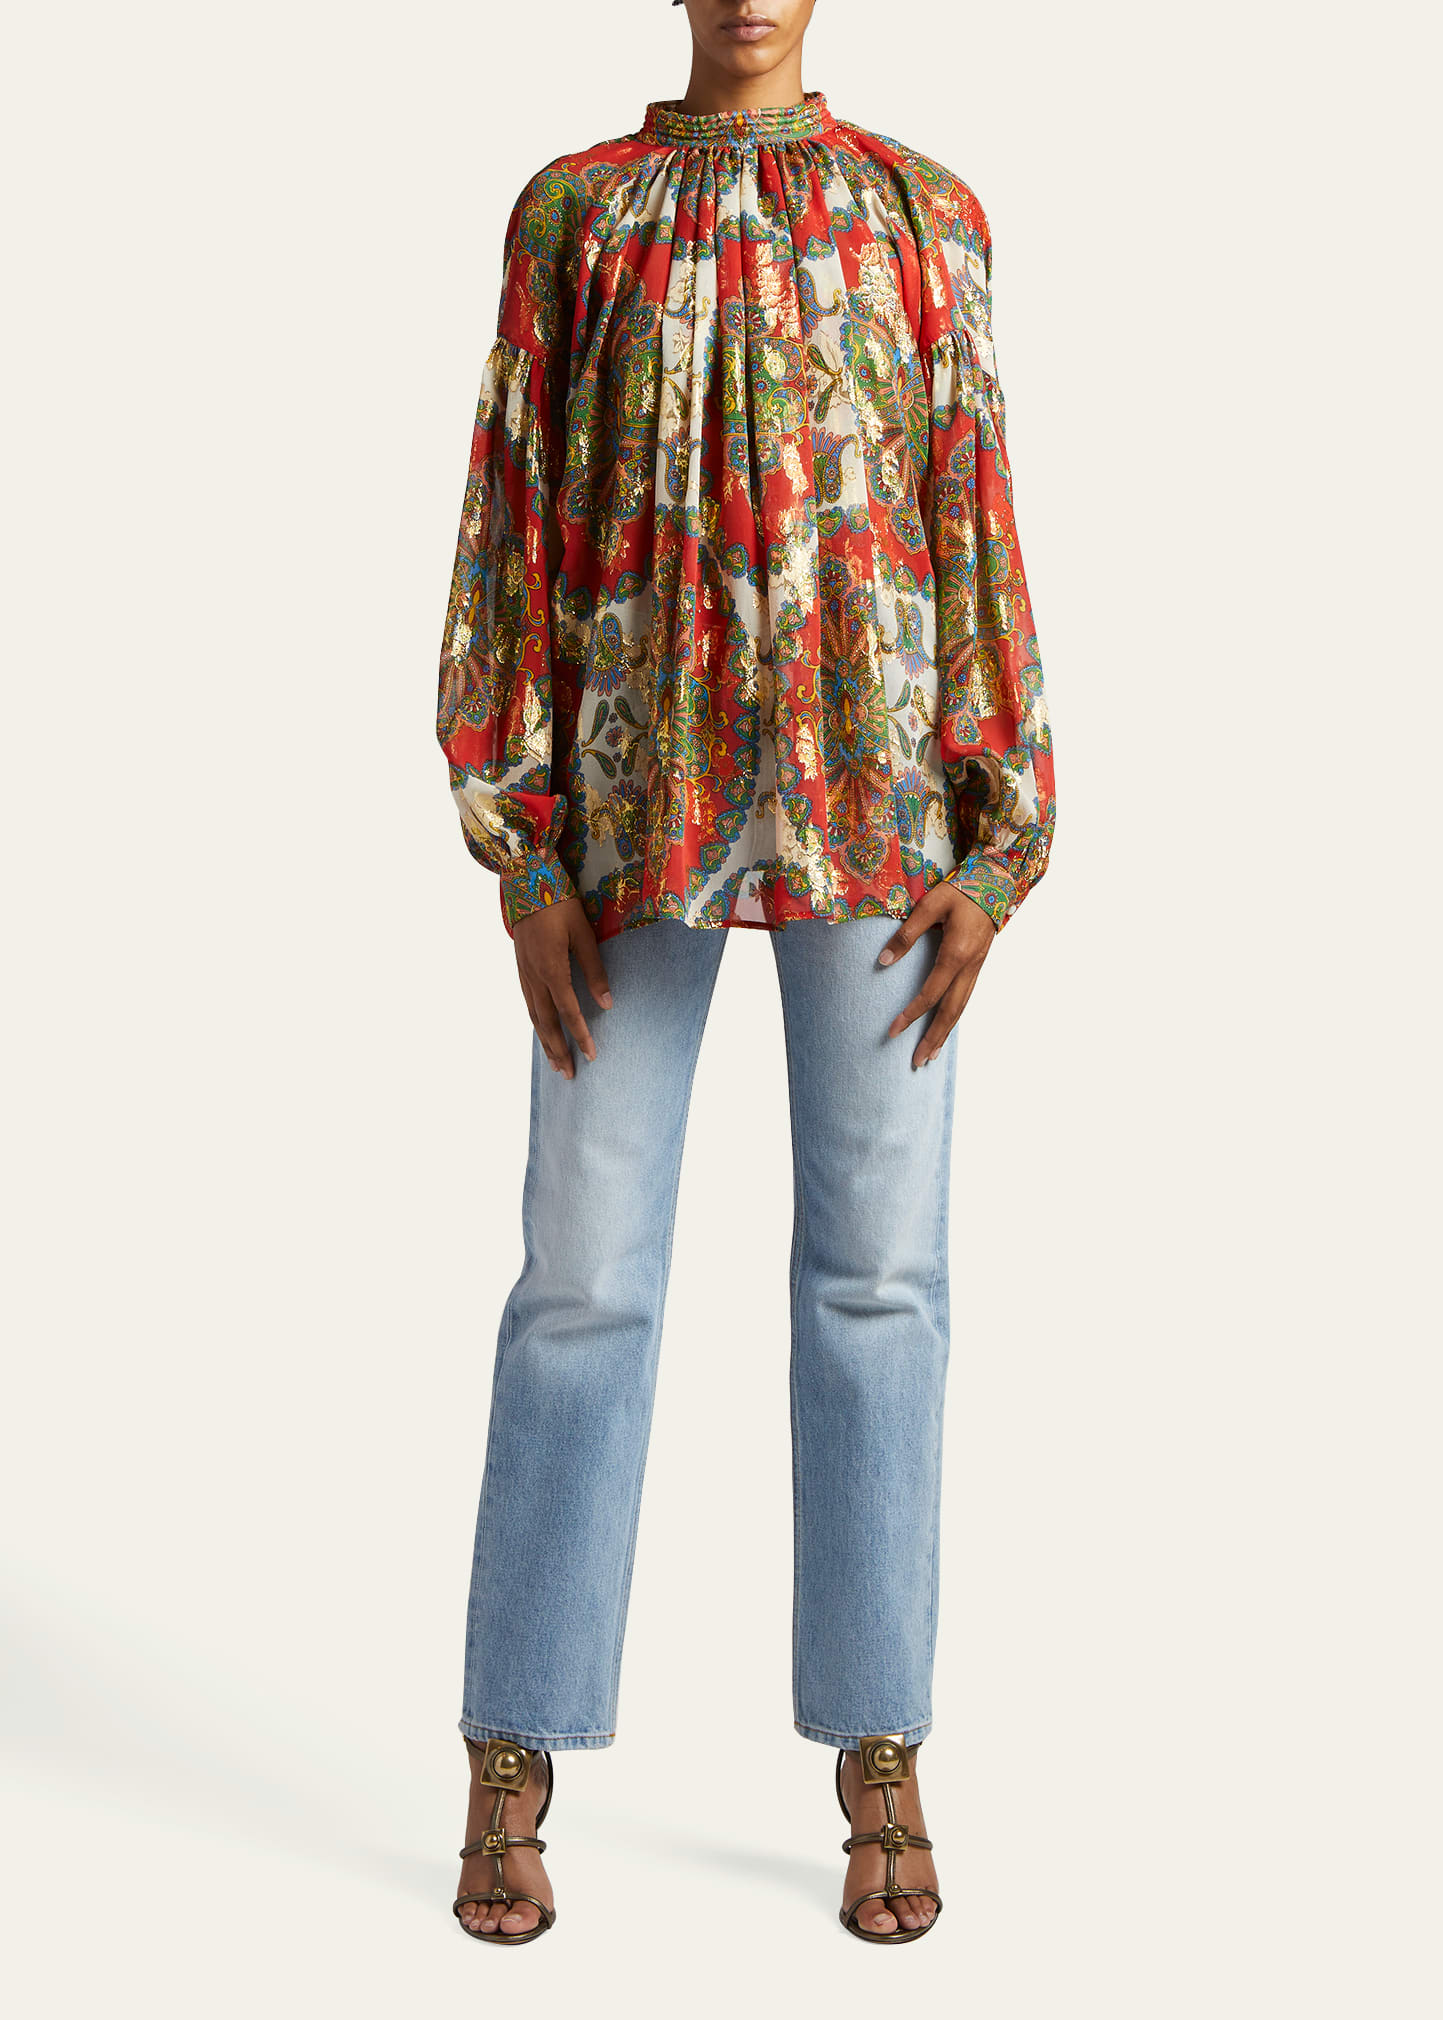 Orion Paisley-Print Metallic Floral Jacquard Shirt